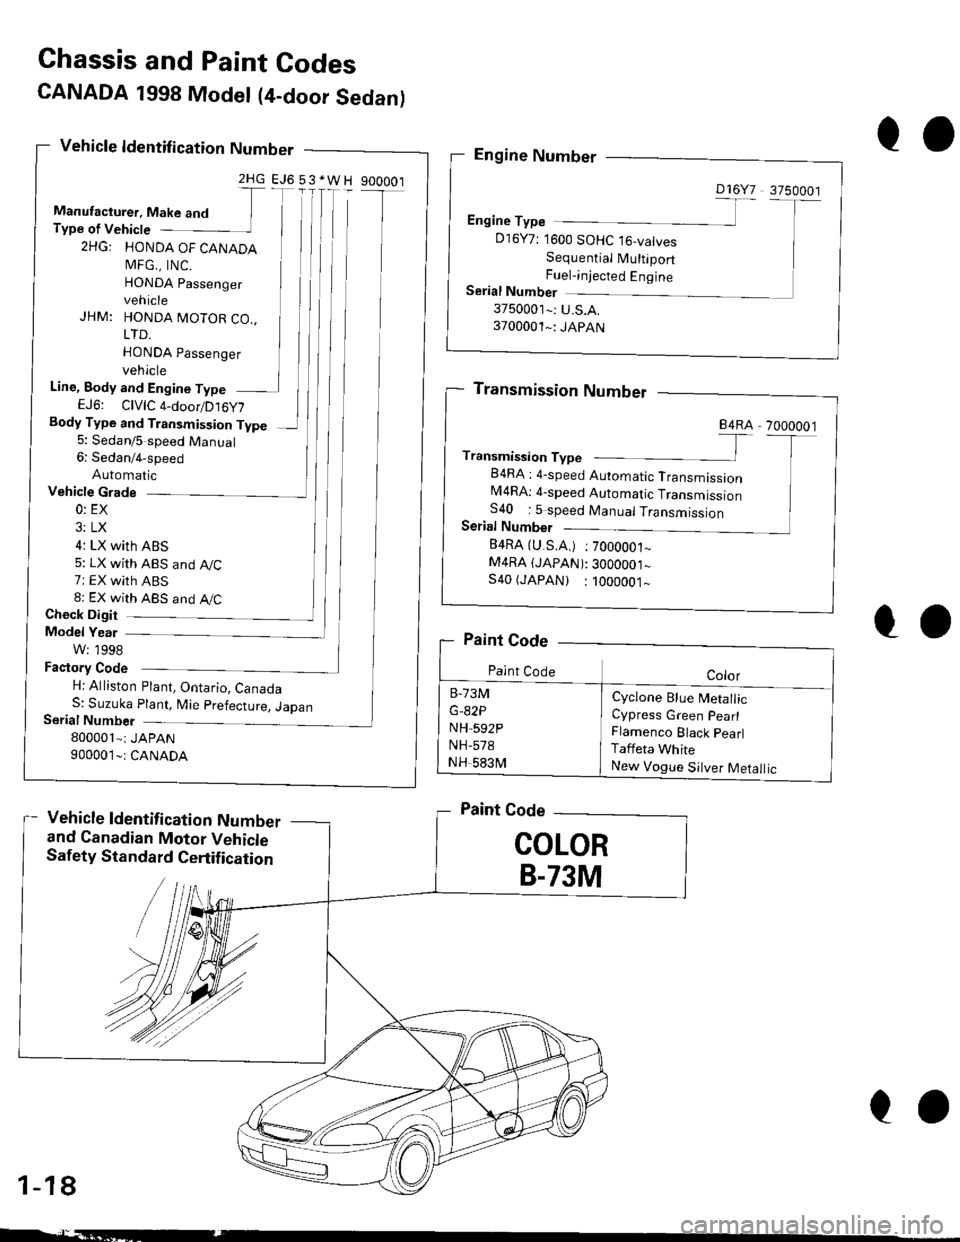 HONDA CIVIC 2000 6.G User Guide CANADA 1998 Model (4-door Sedanl
Vehicle ldentification Number
Chassis and Paint Codes
2HG.I
Manufacturer, Make andType of Vehicte I2HG: HONDA OF CANADA ]MFG,, INC.
HONDA passenger lvehicle
JHM: HONDA